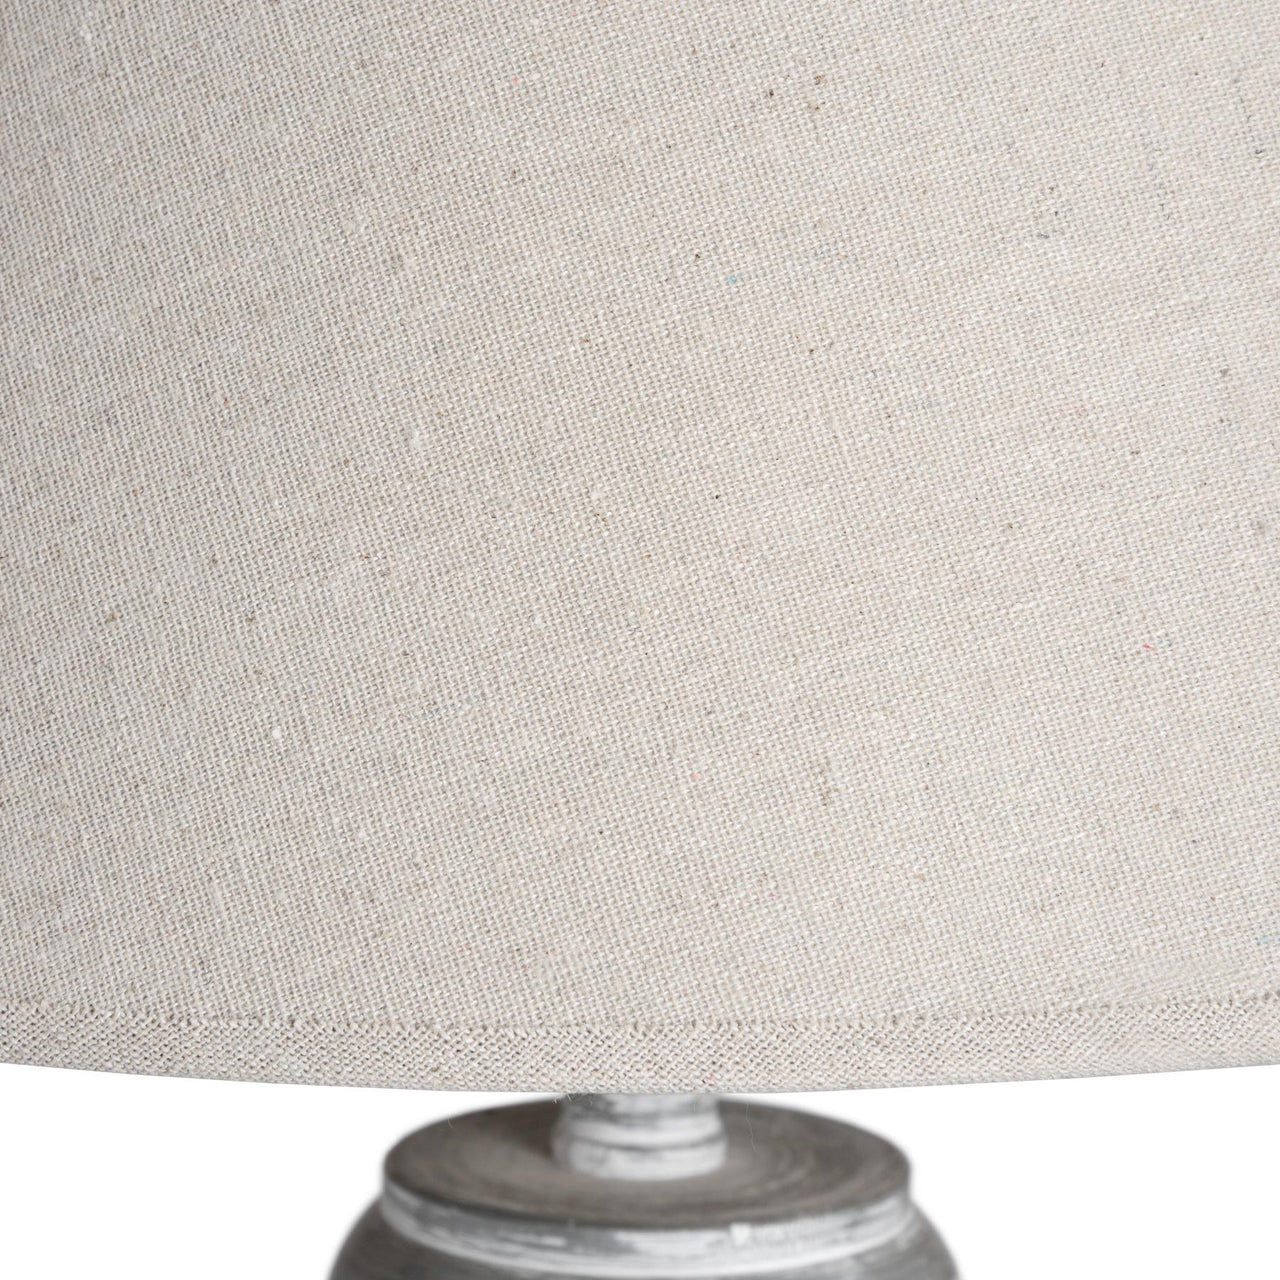 Pella Table Lamp